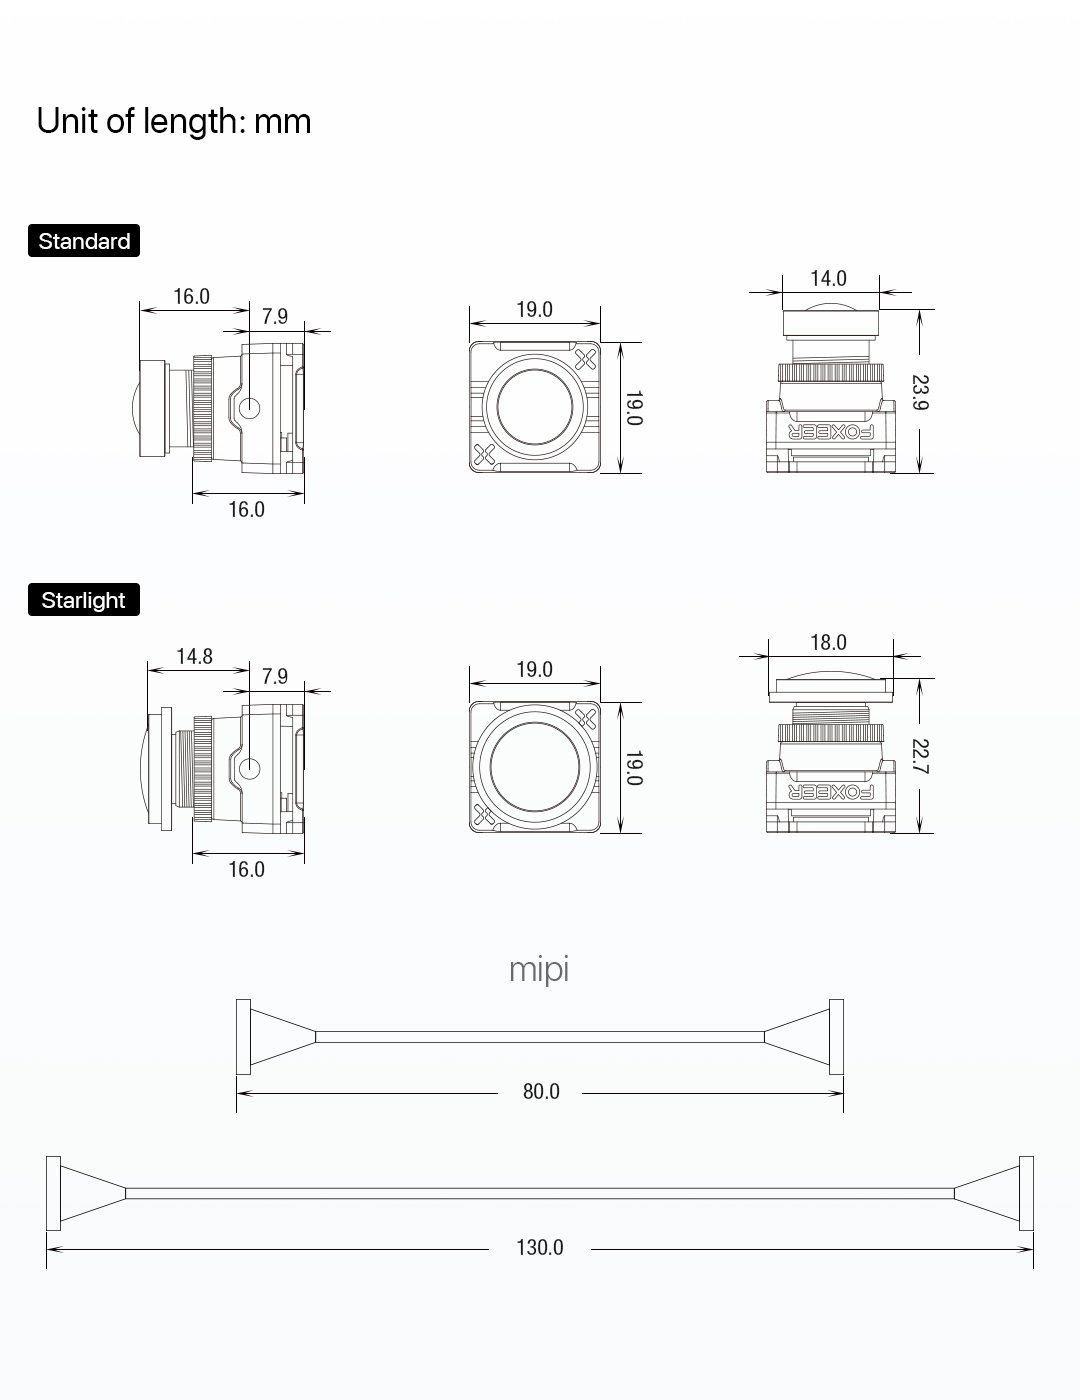 Foxeer Apollo Digital FPV MIPI Camera (Compatible with DJI Vista) - Starlight Lens 9 - Foxeer